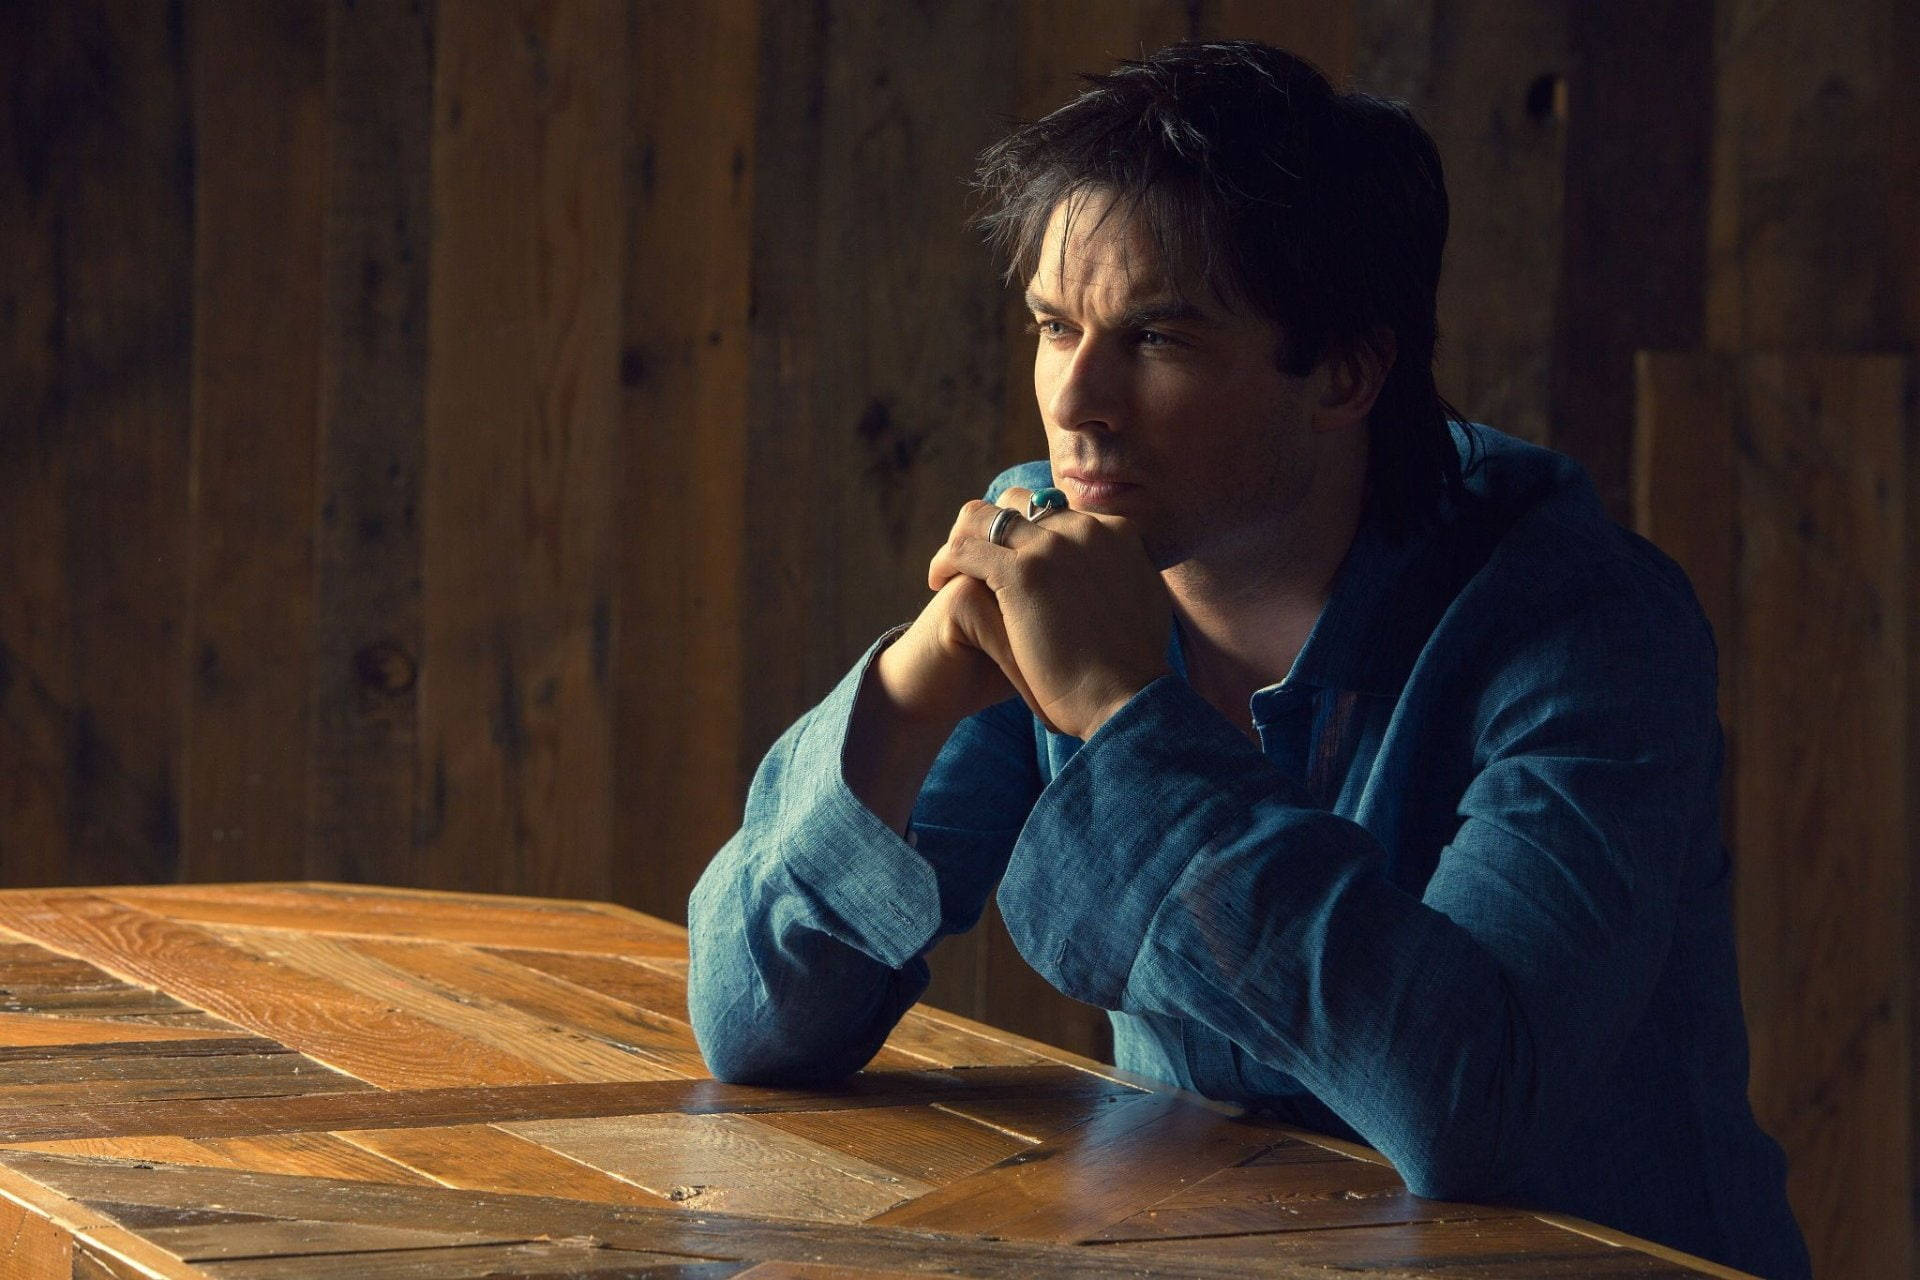 Ian Somerhalder At Wooden Table Pose